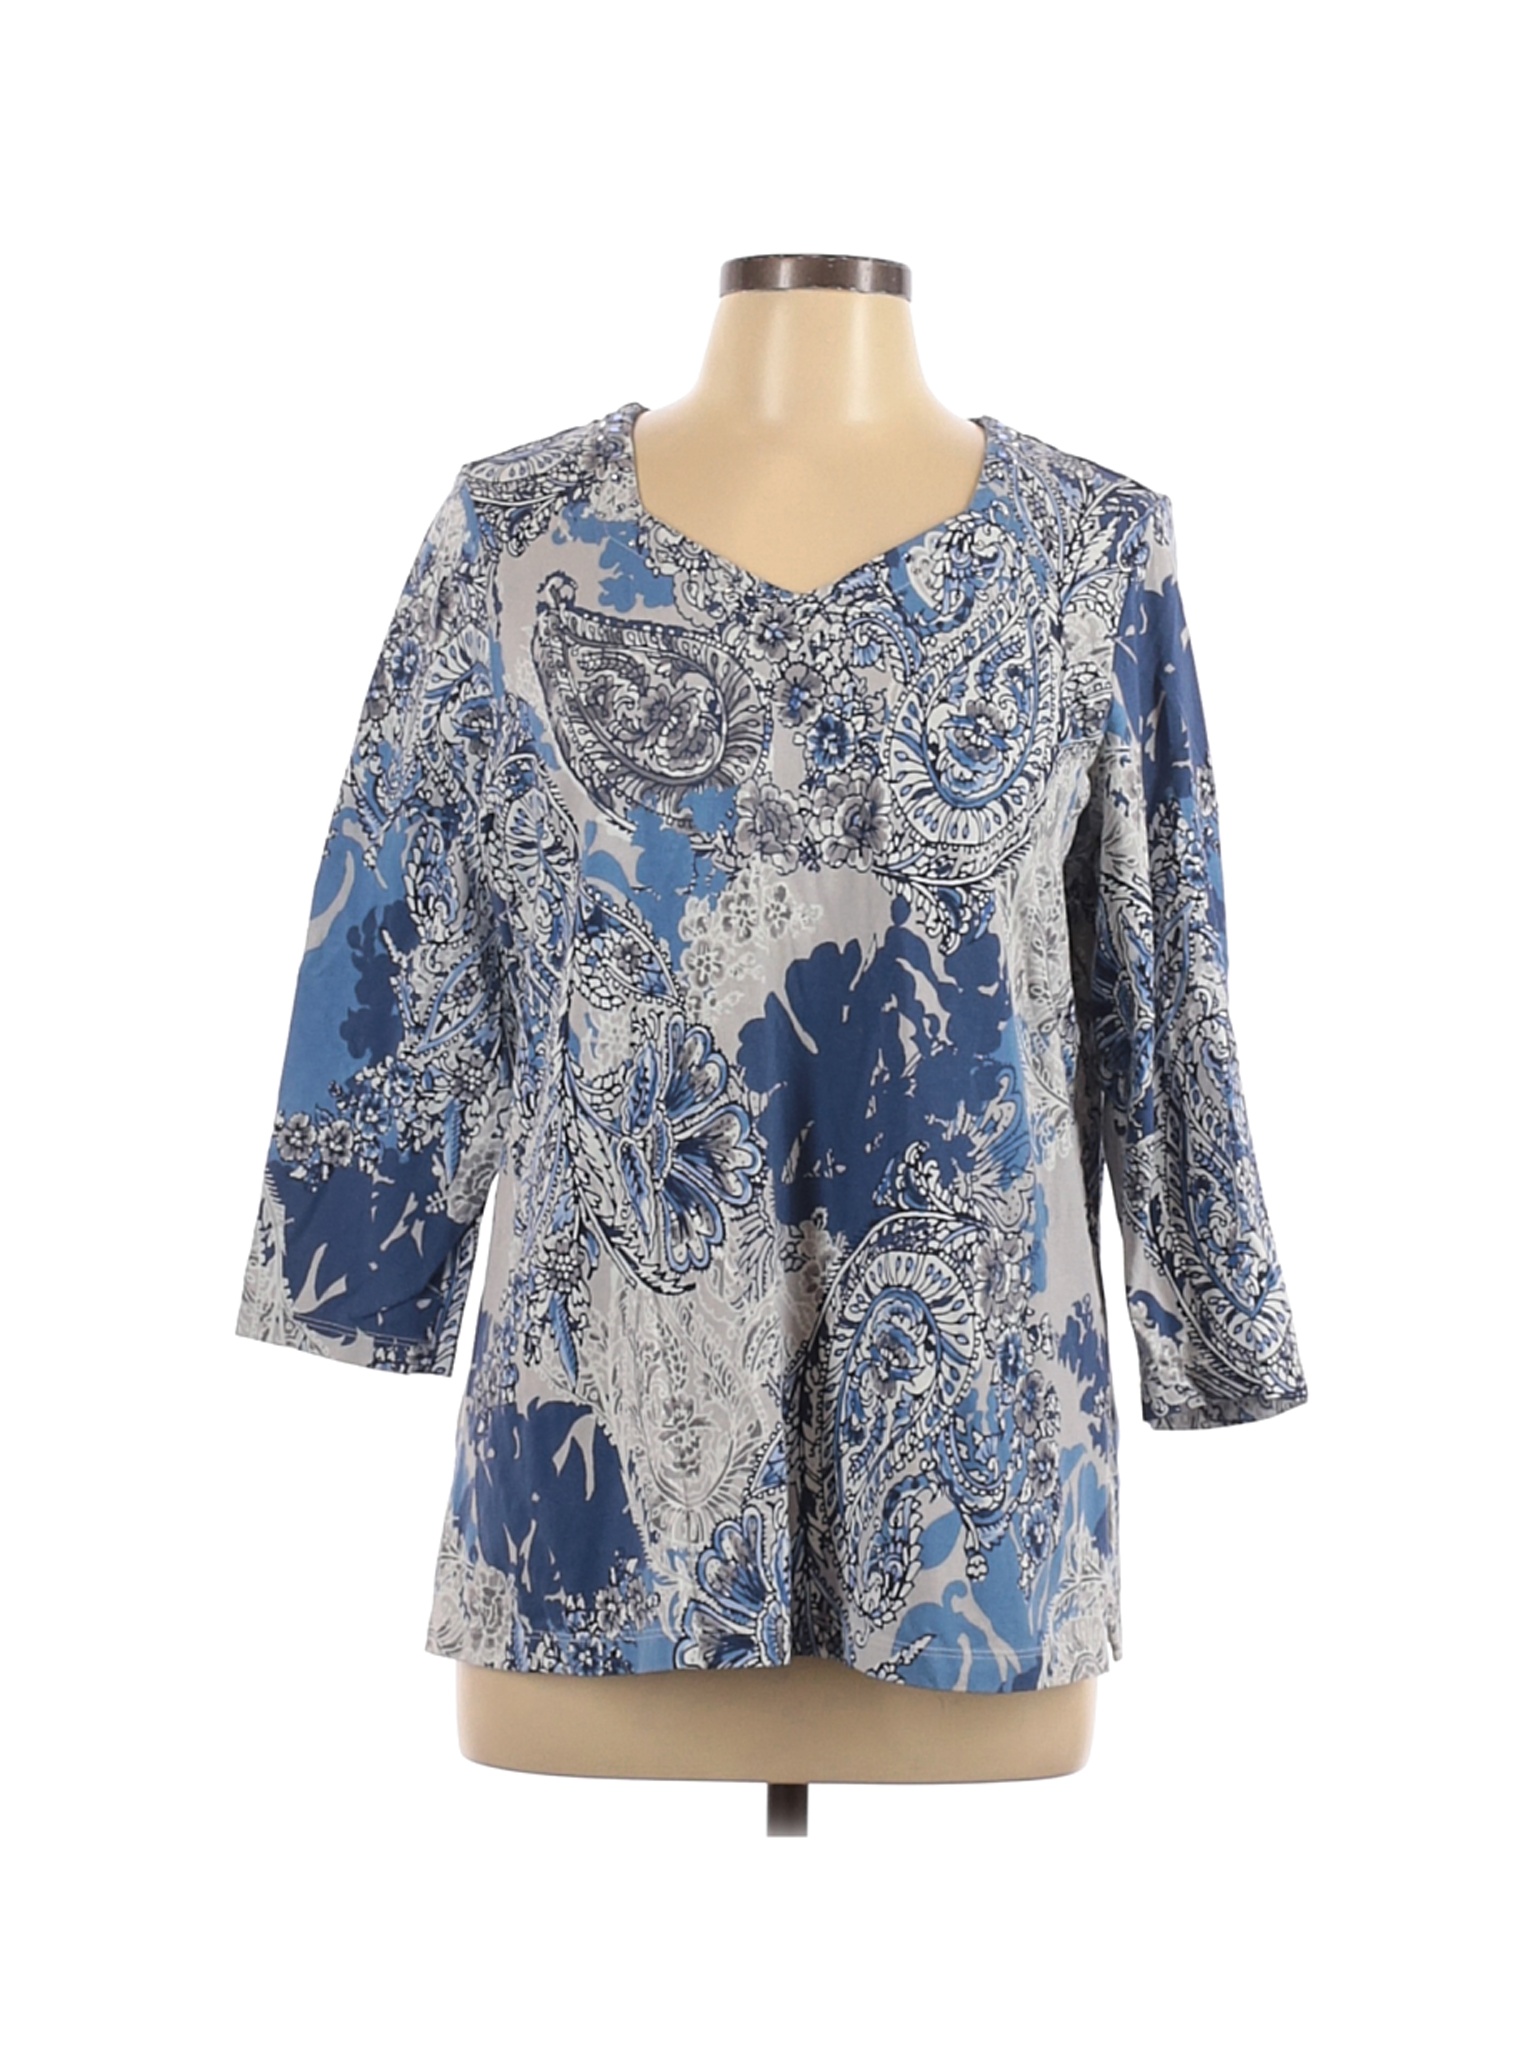 Alfred Dunner Women Blue 3/4 Sleeve Top L | eBay